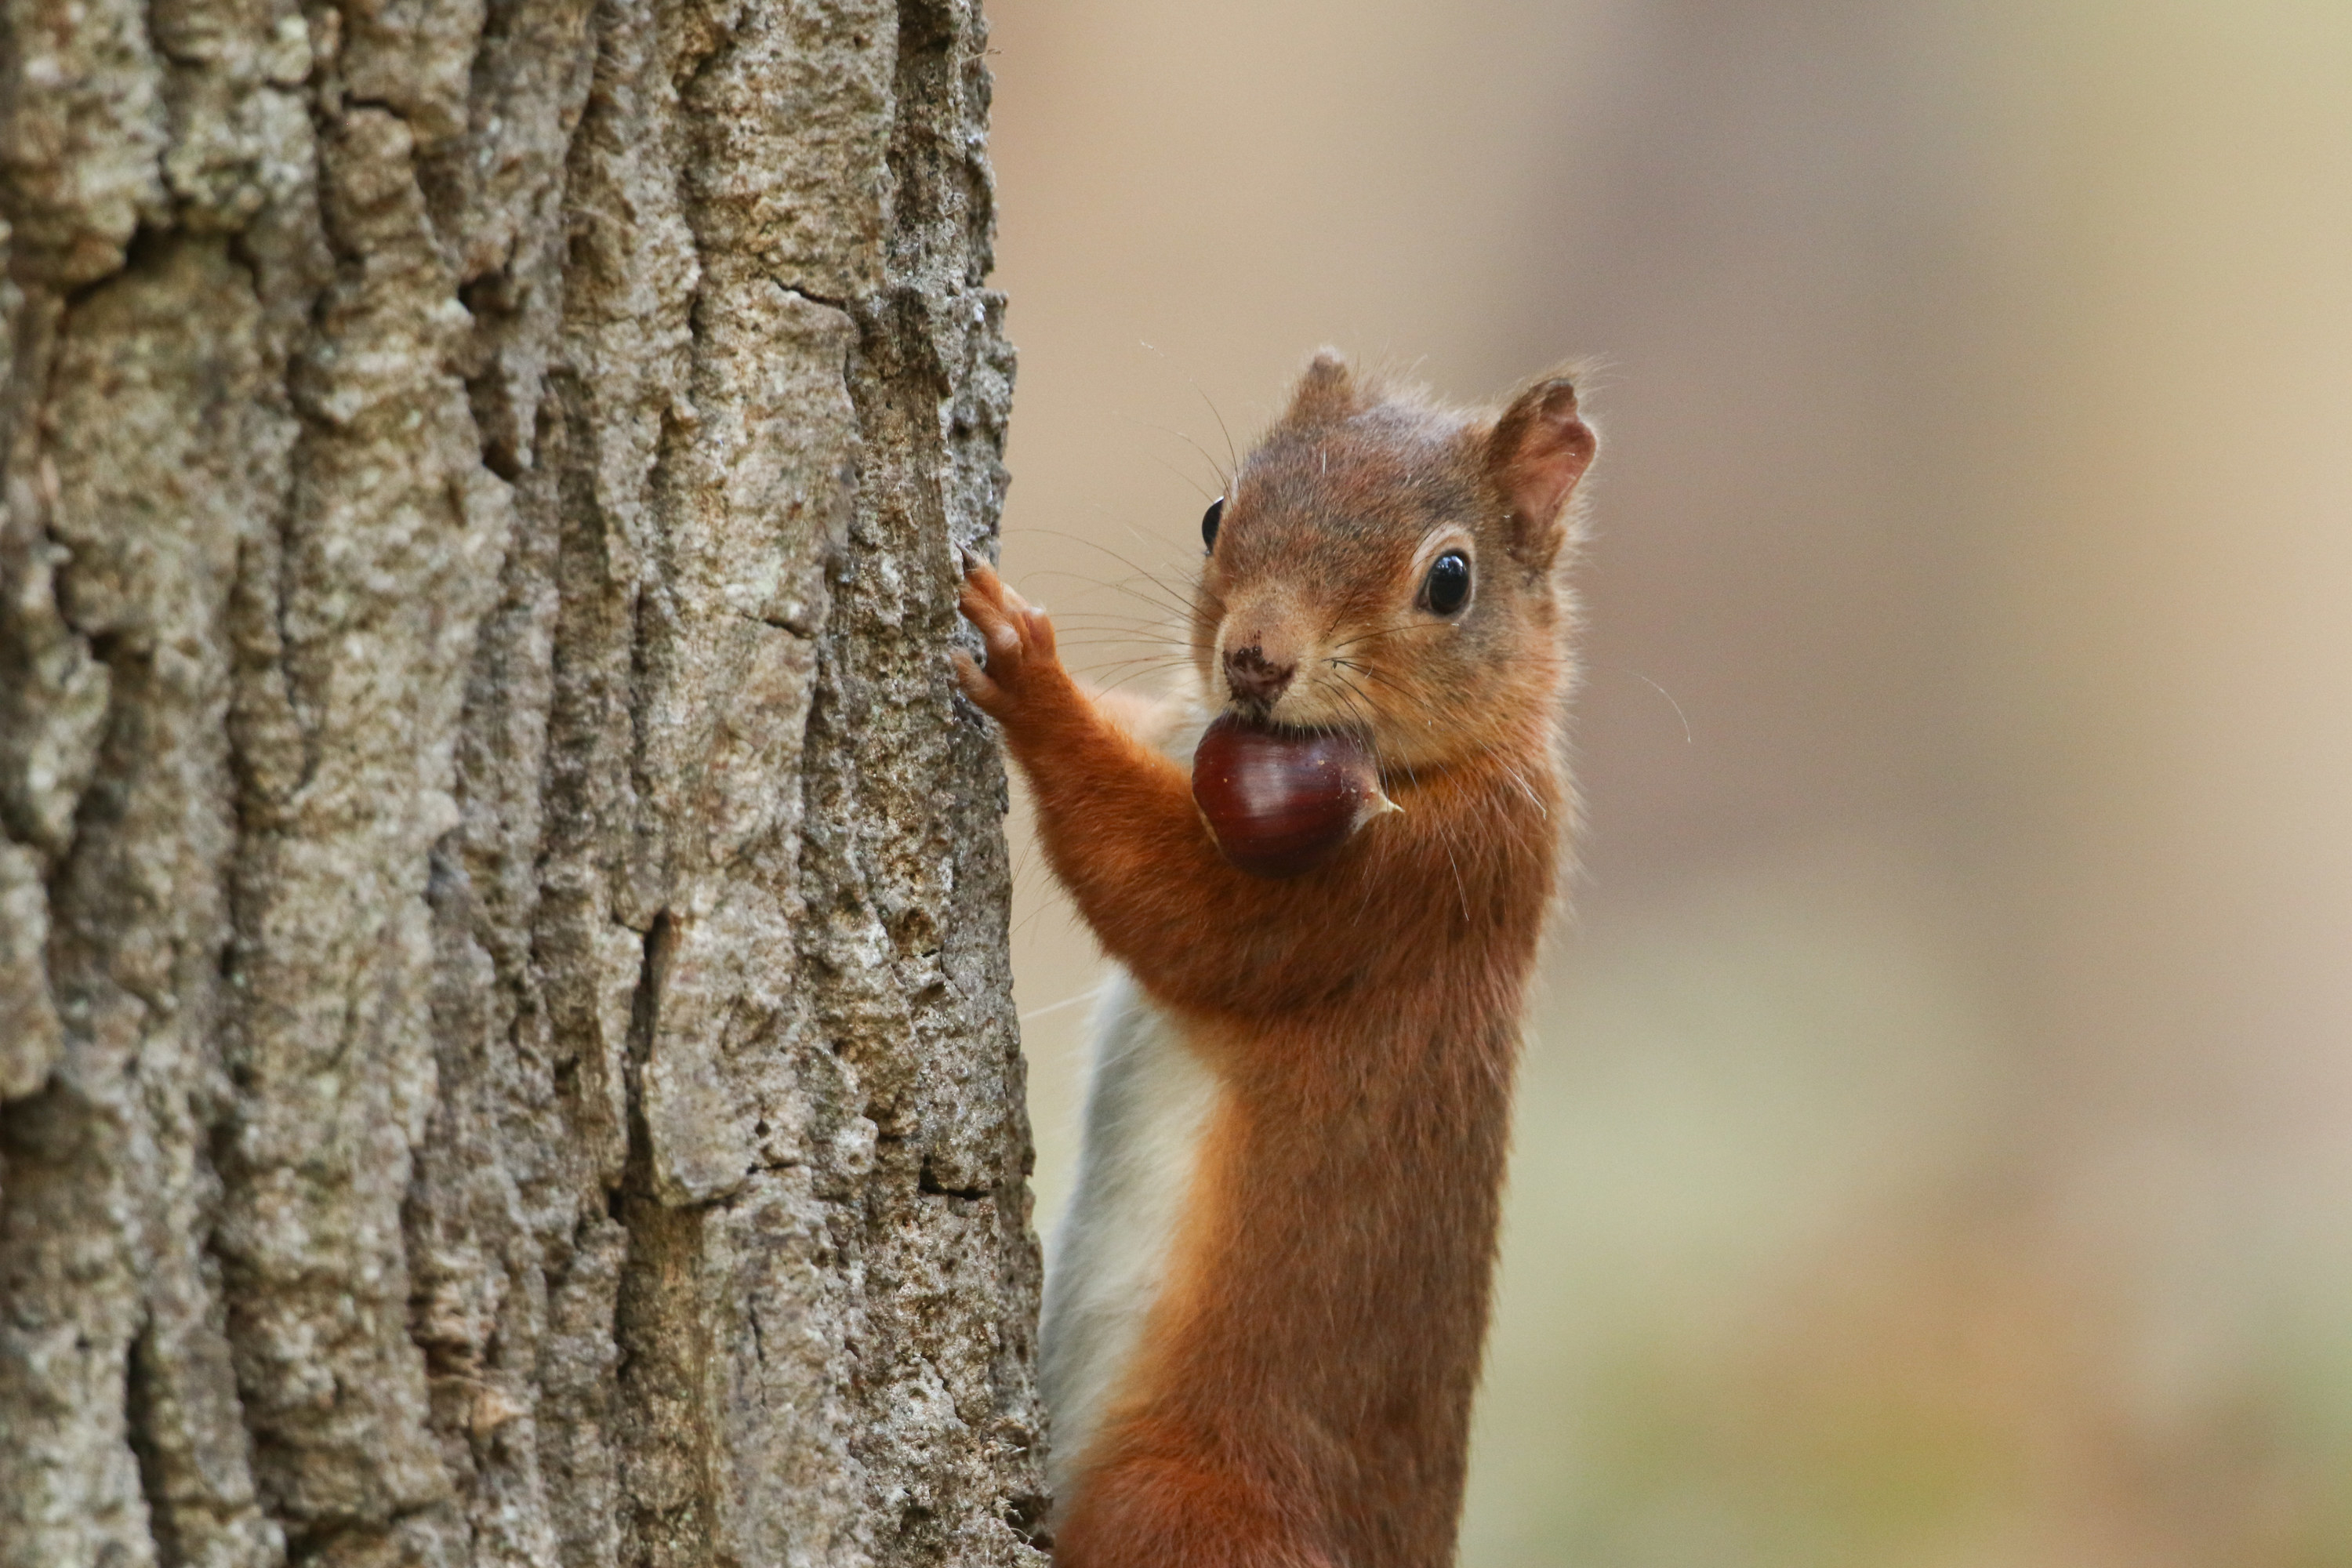 A squirrel climbing a tree bark